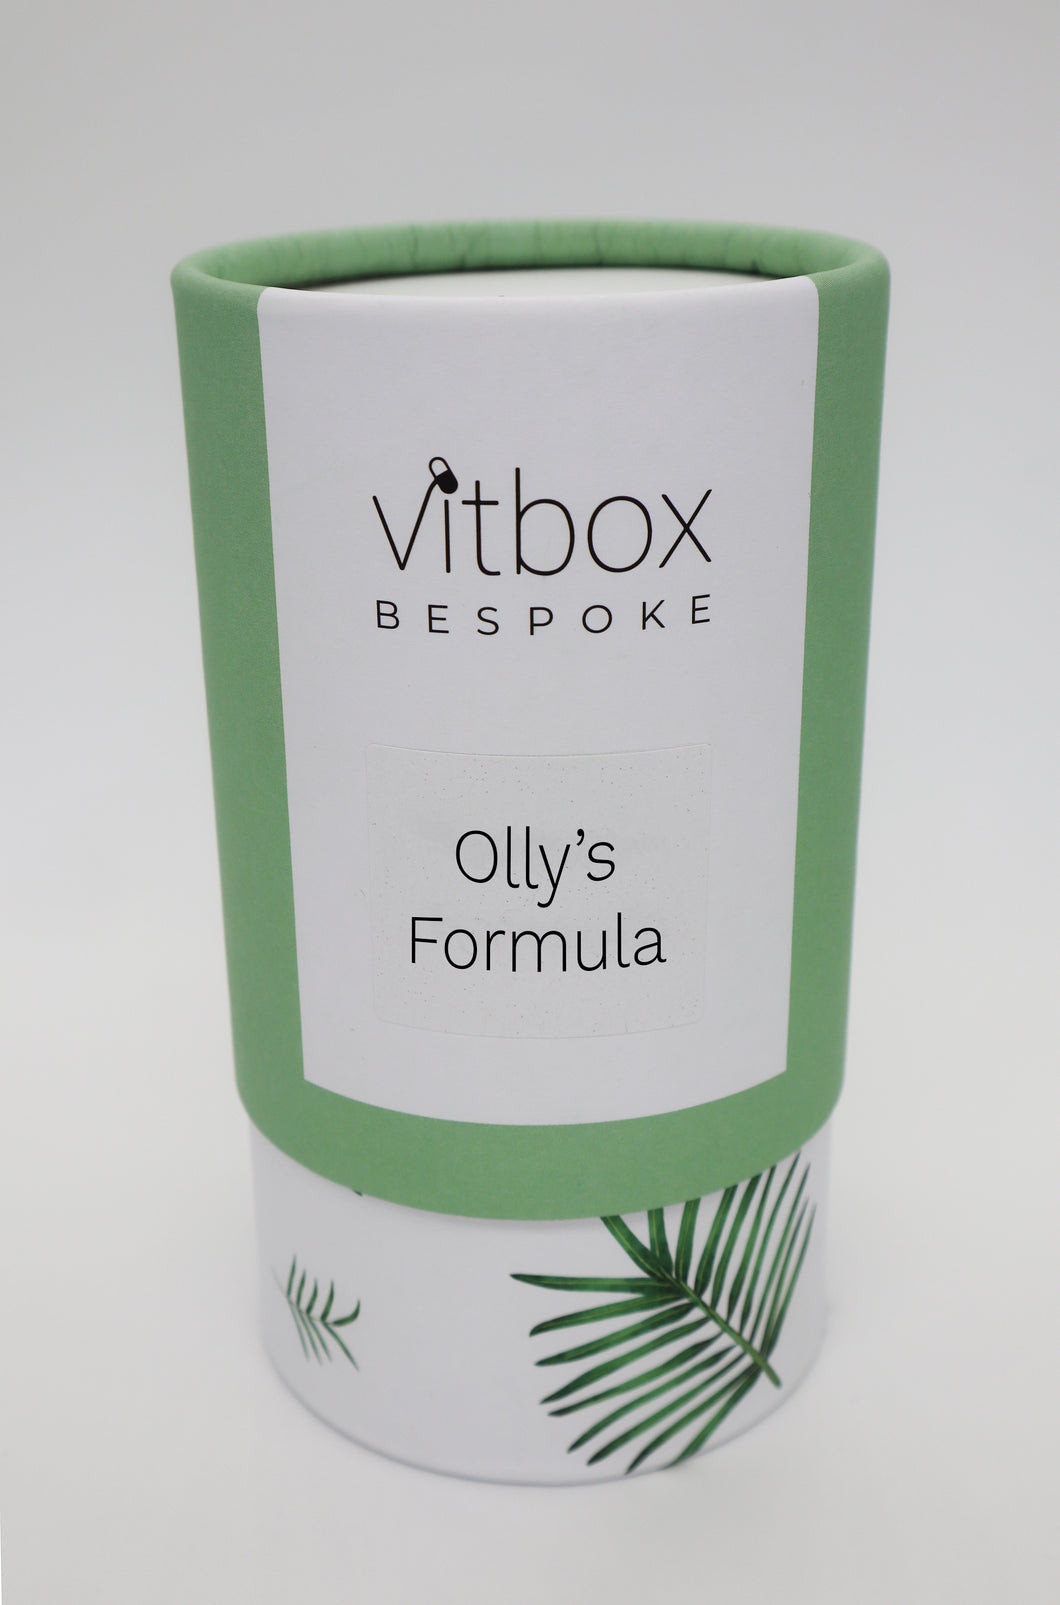 Olly's Vitbox Bespoke